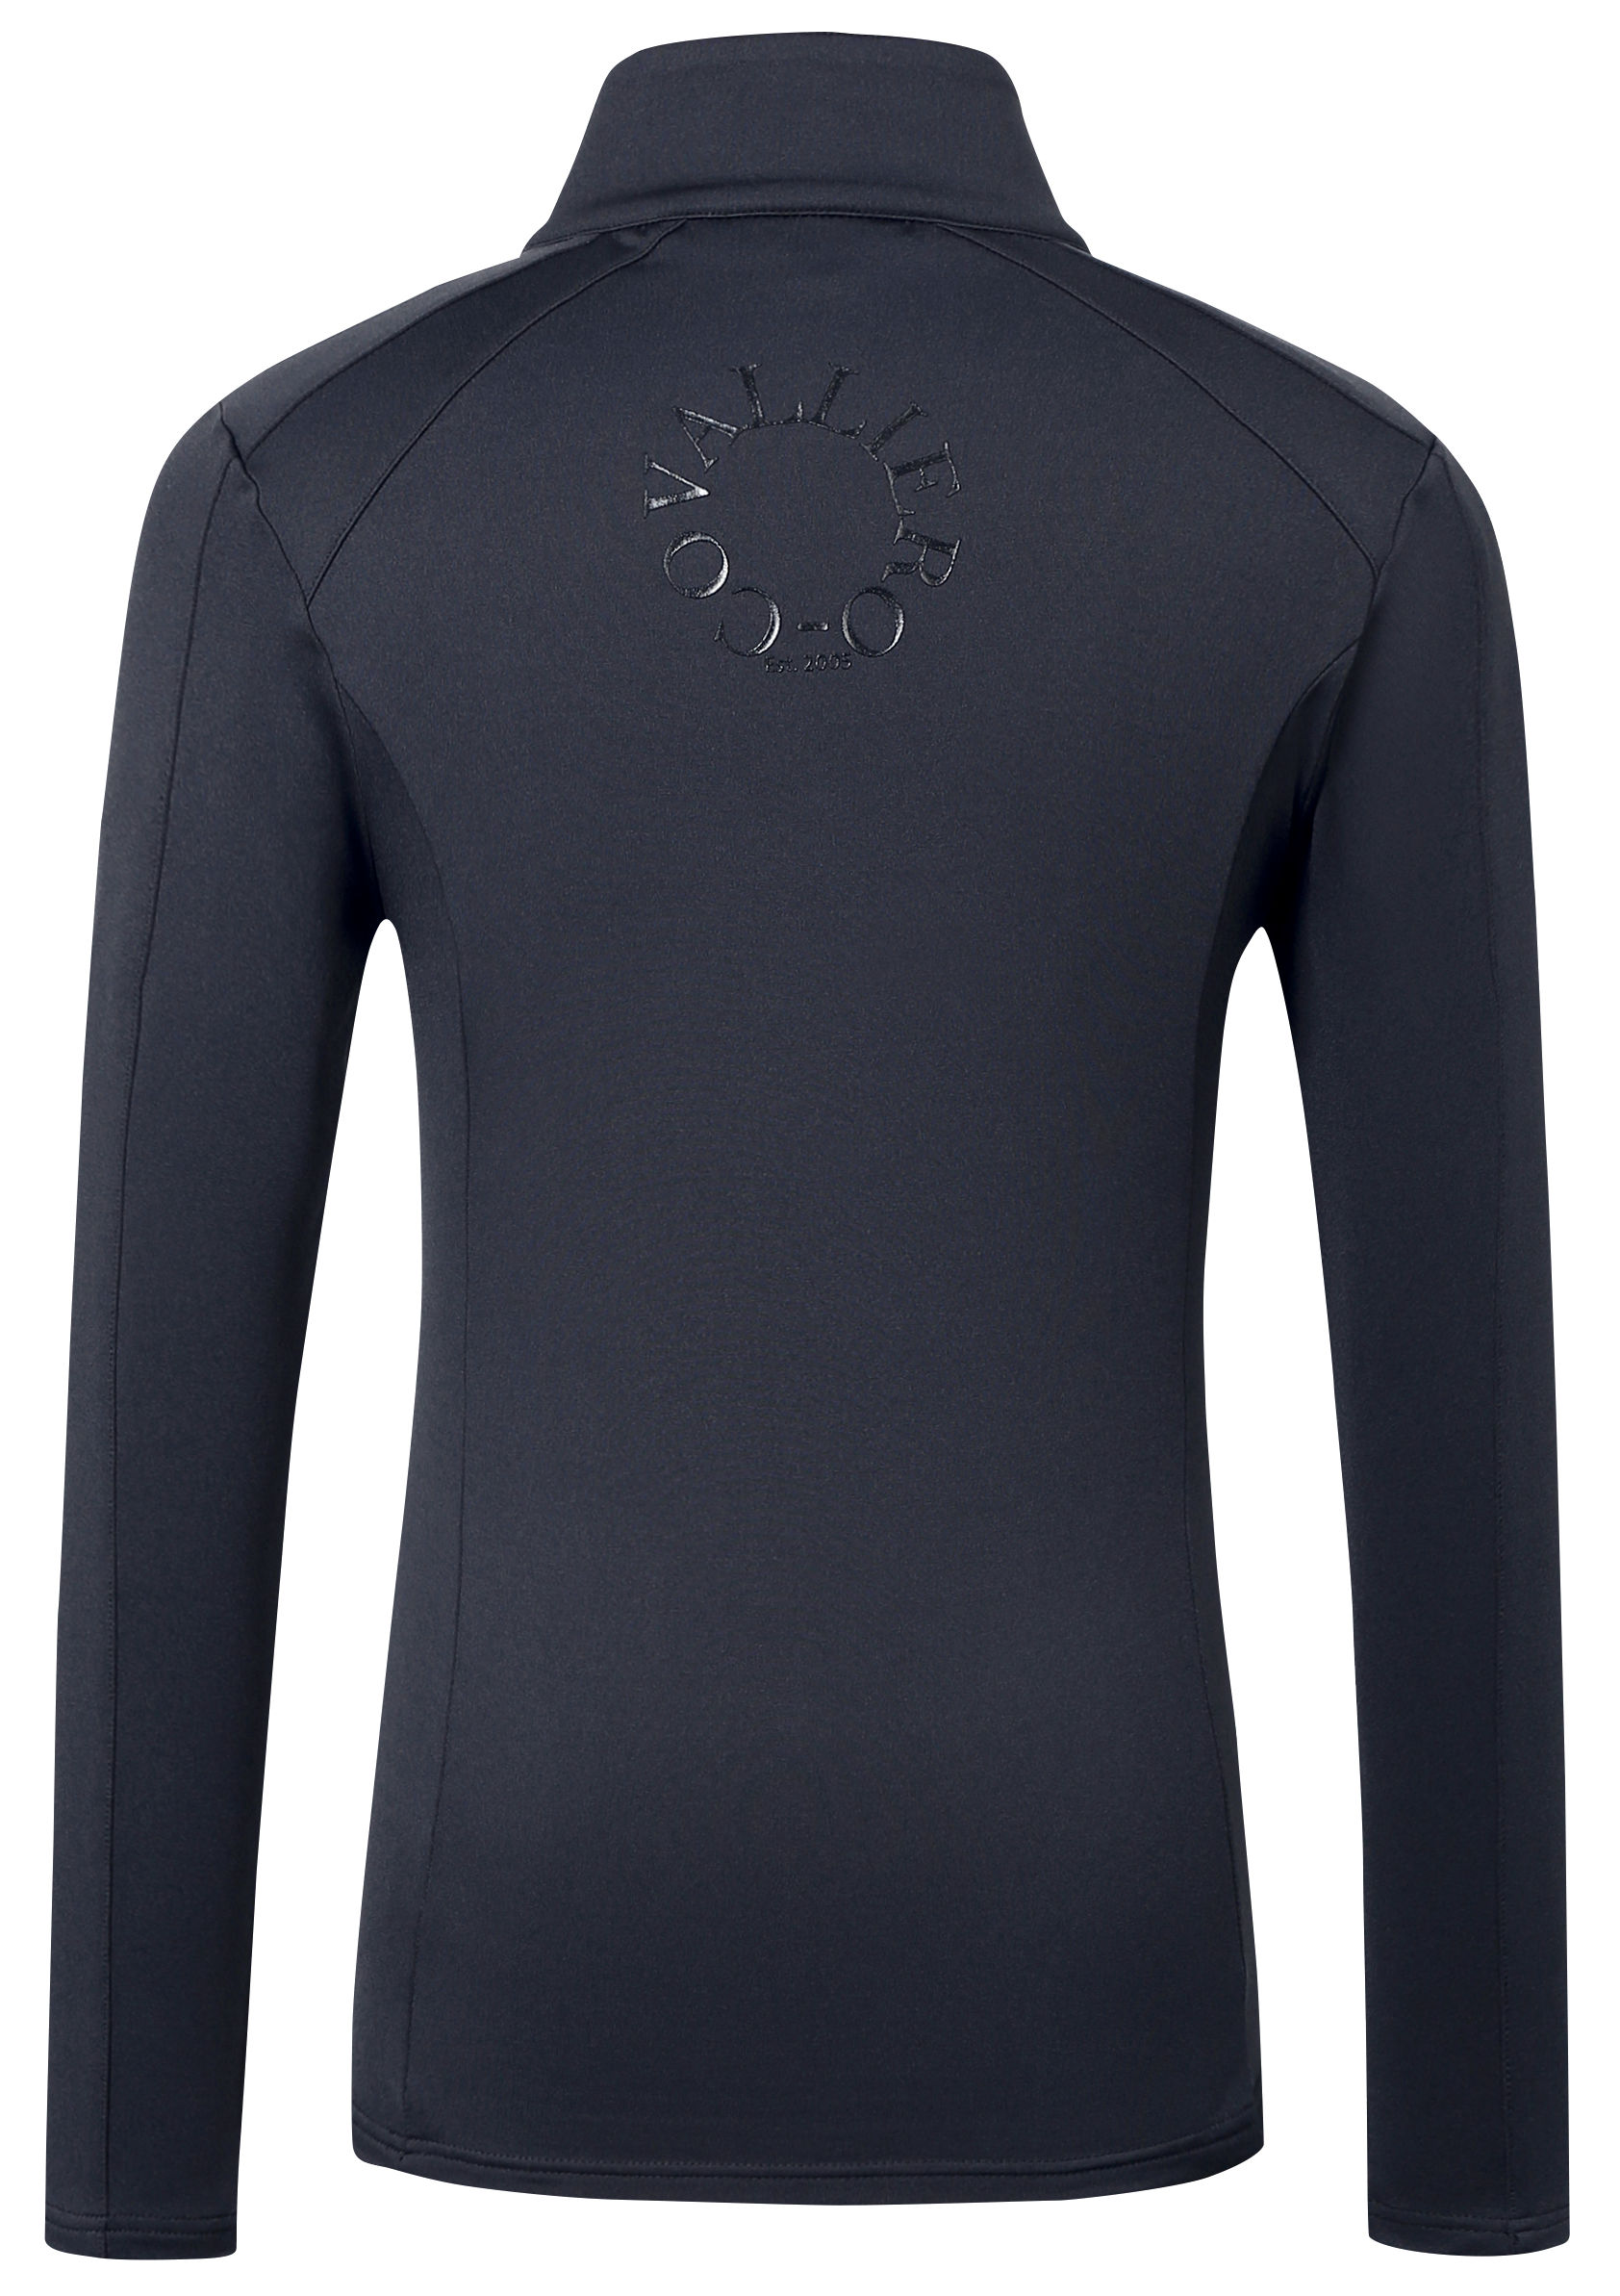 Covalliero Damen Langarm Active Shirt Trainingsshirt - schwarz - M - 2